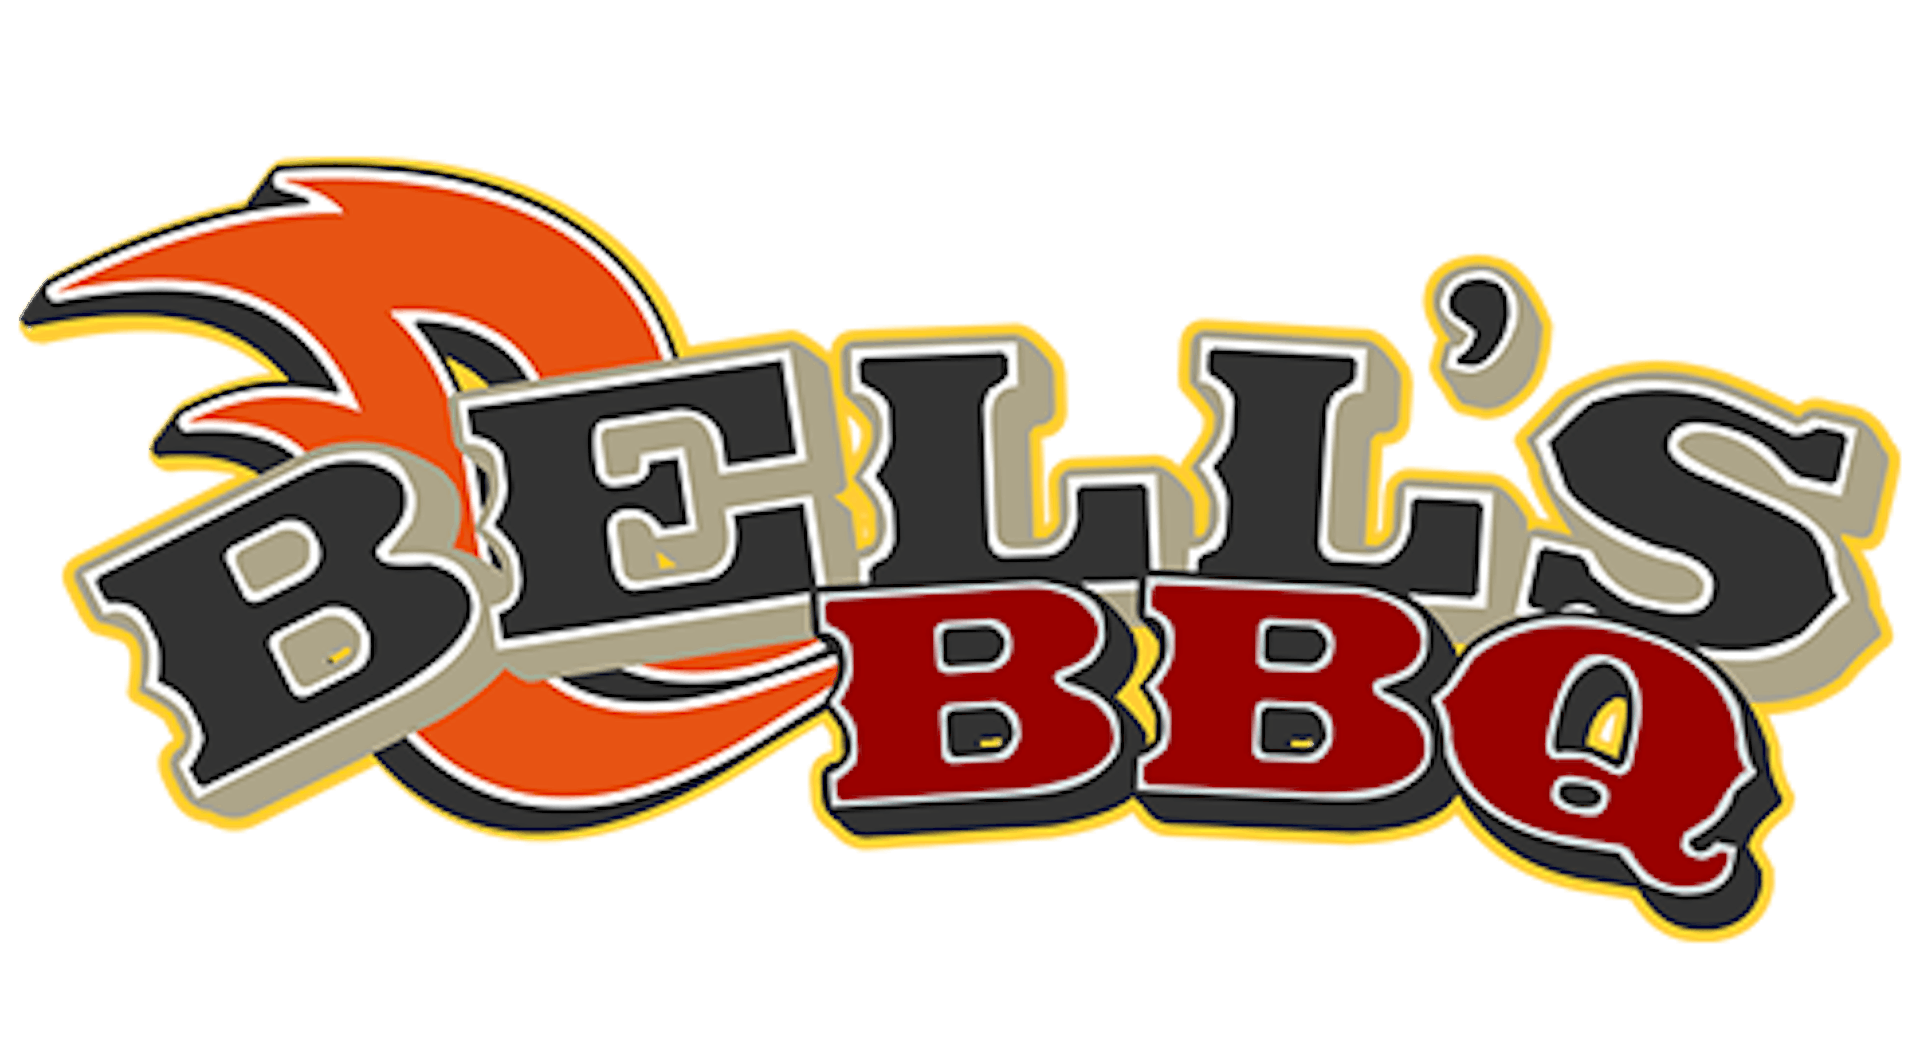 BELL'S BBQ